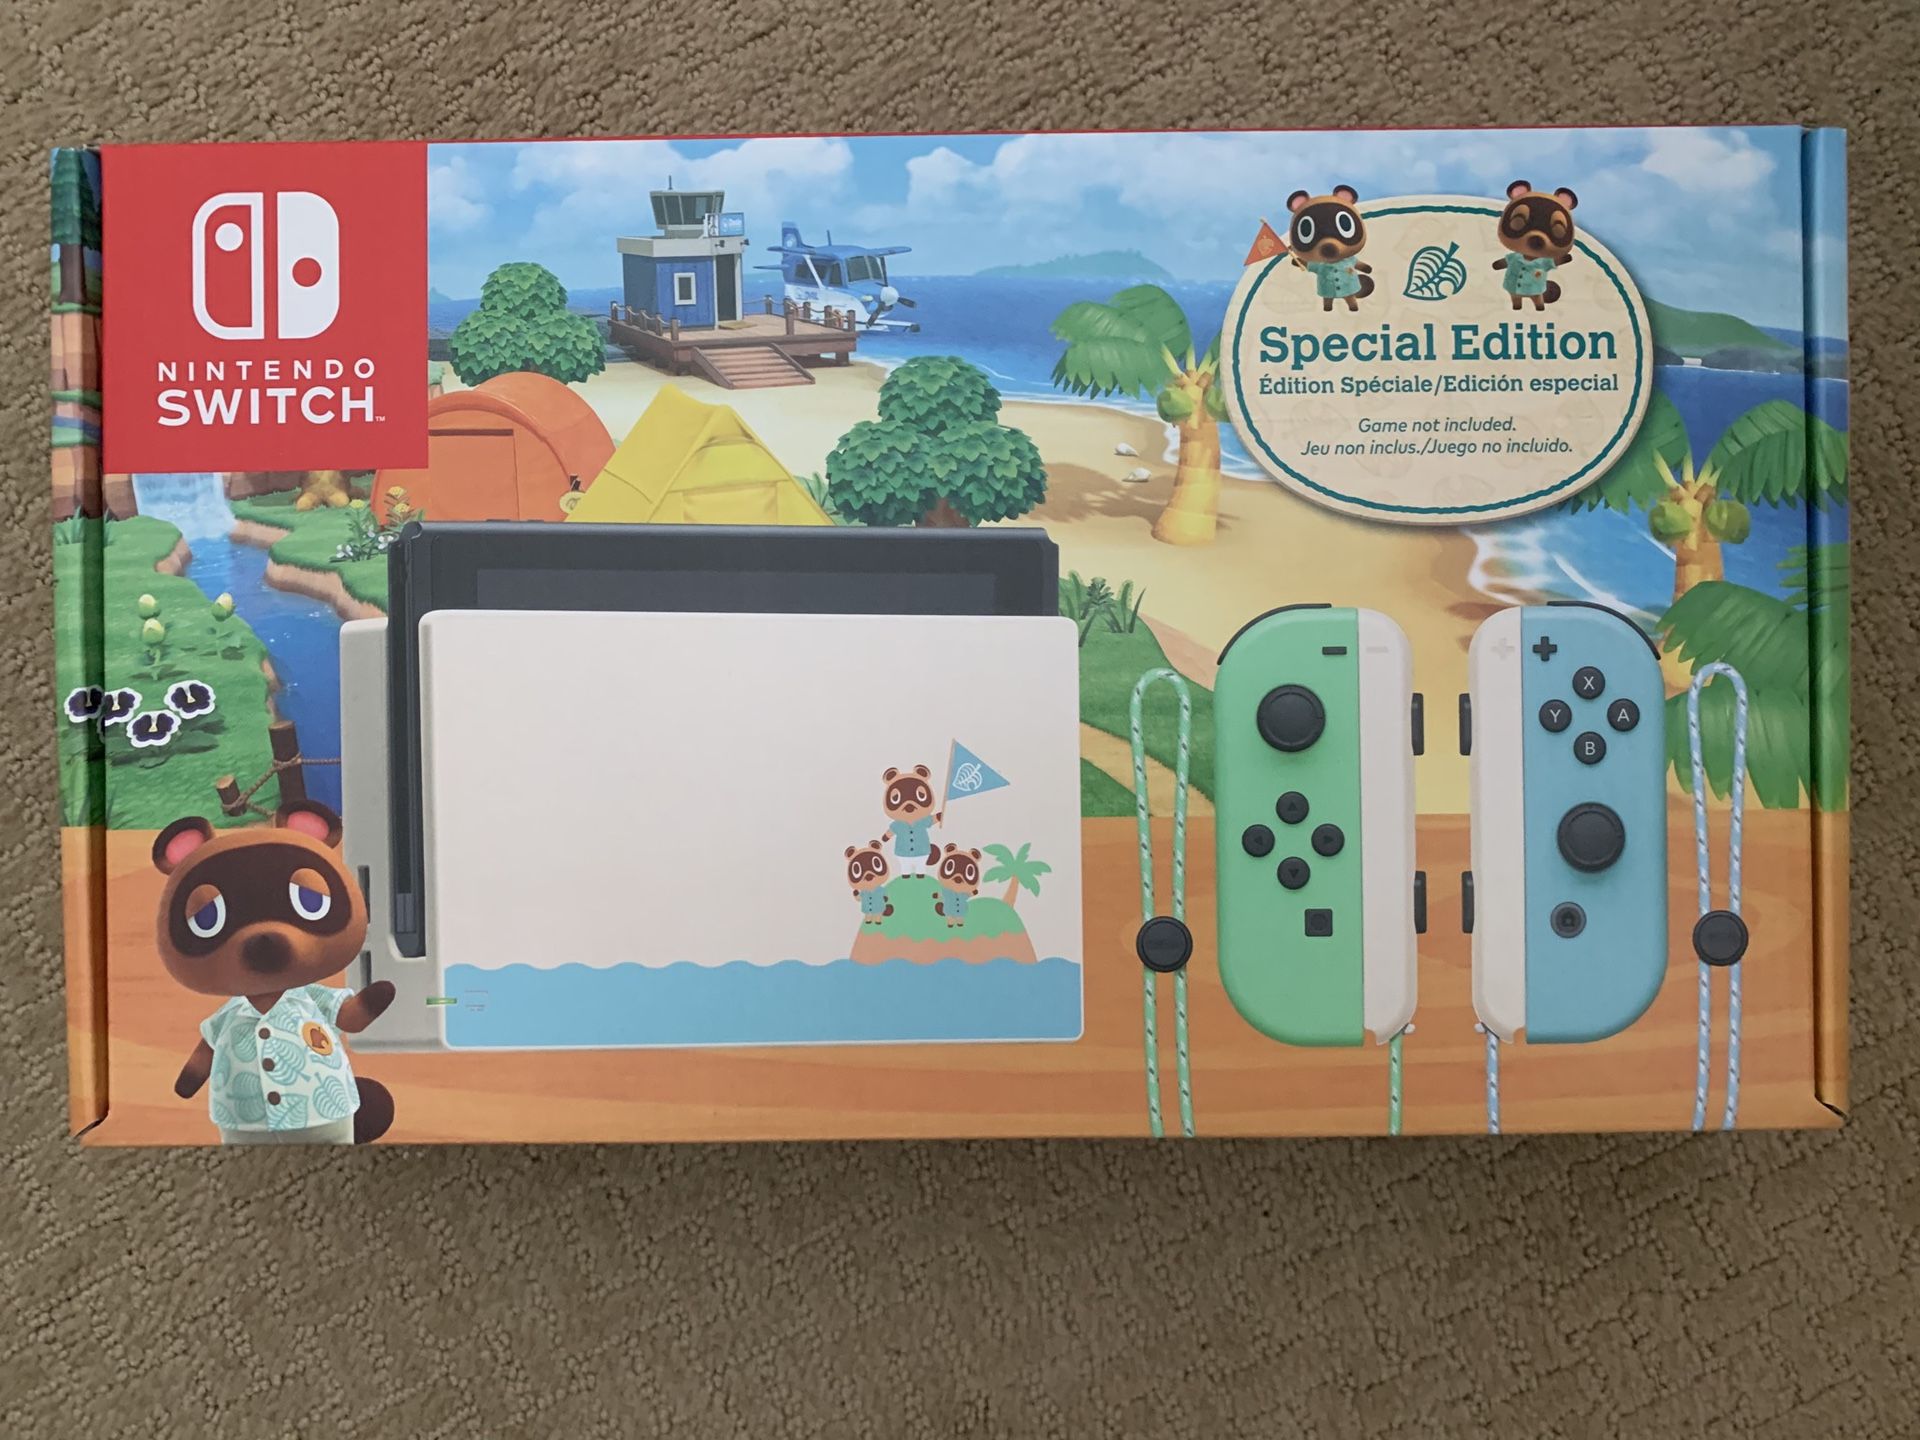 Nintendo Switch Animal Crossing: New Horizons Edition - 32 GB Console